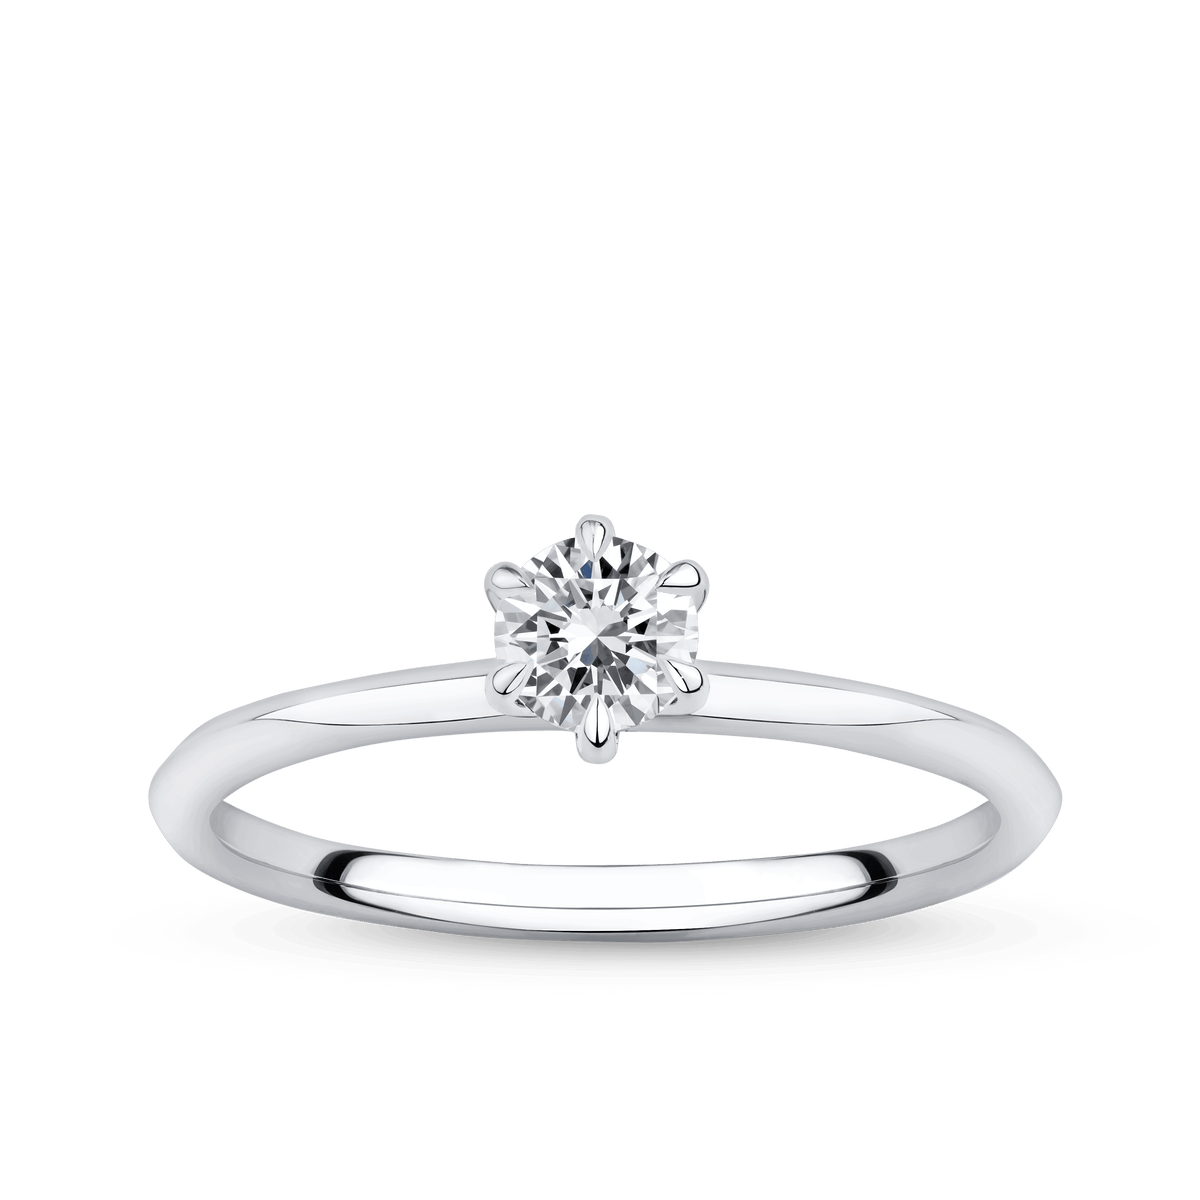 Amāre 0.30 Carat TW Diamond Solitaire Engagement Ring set in Platinum - Wallace Bishop